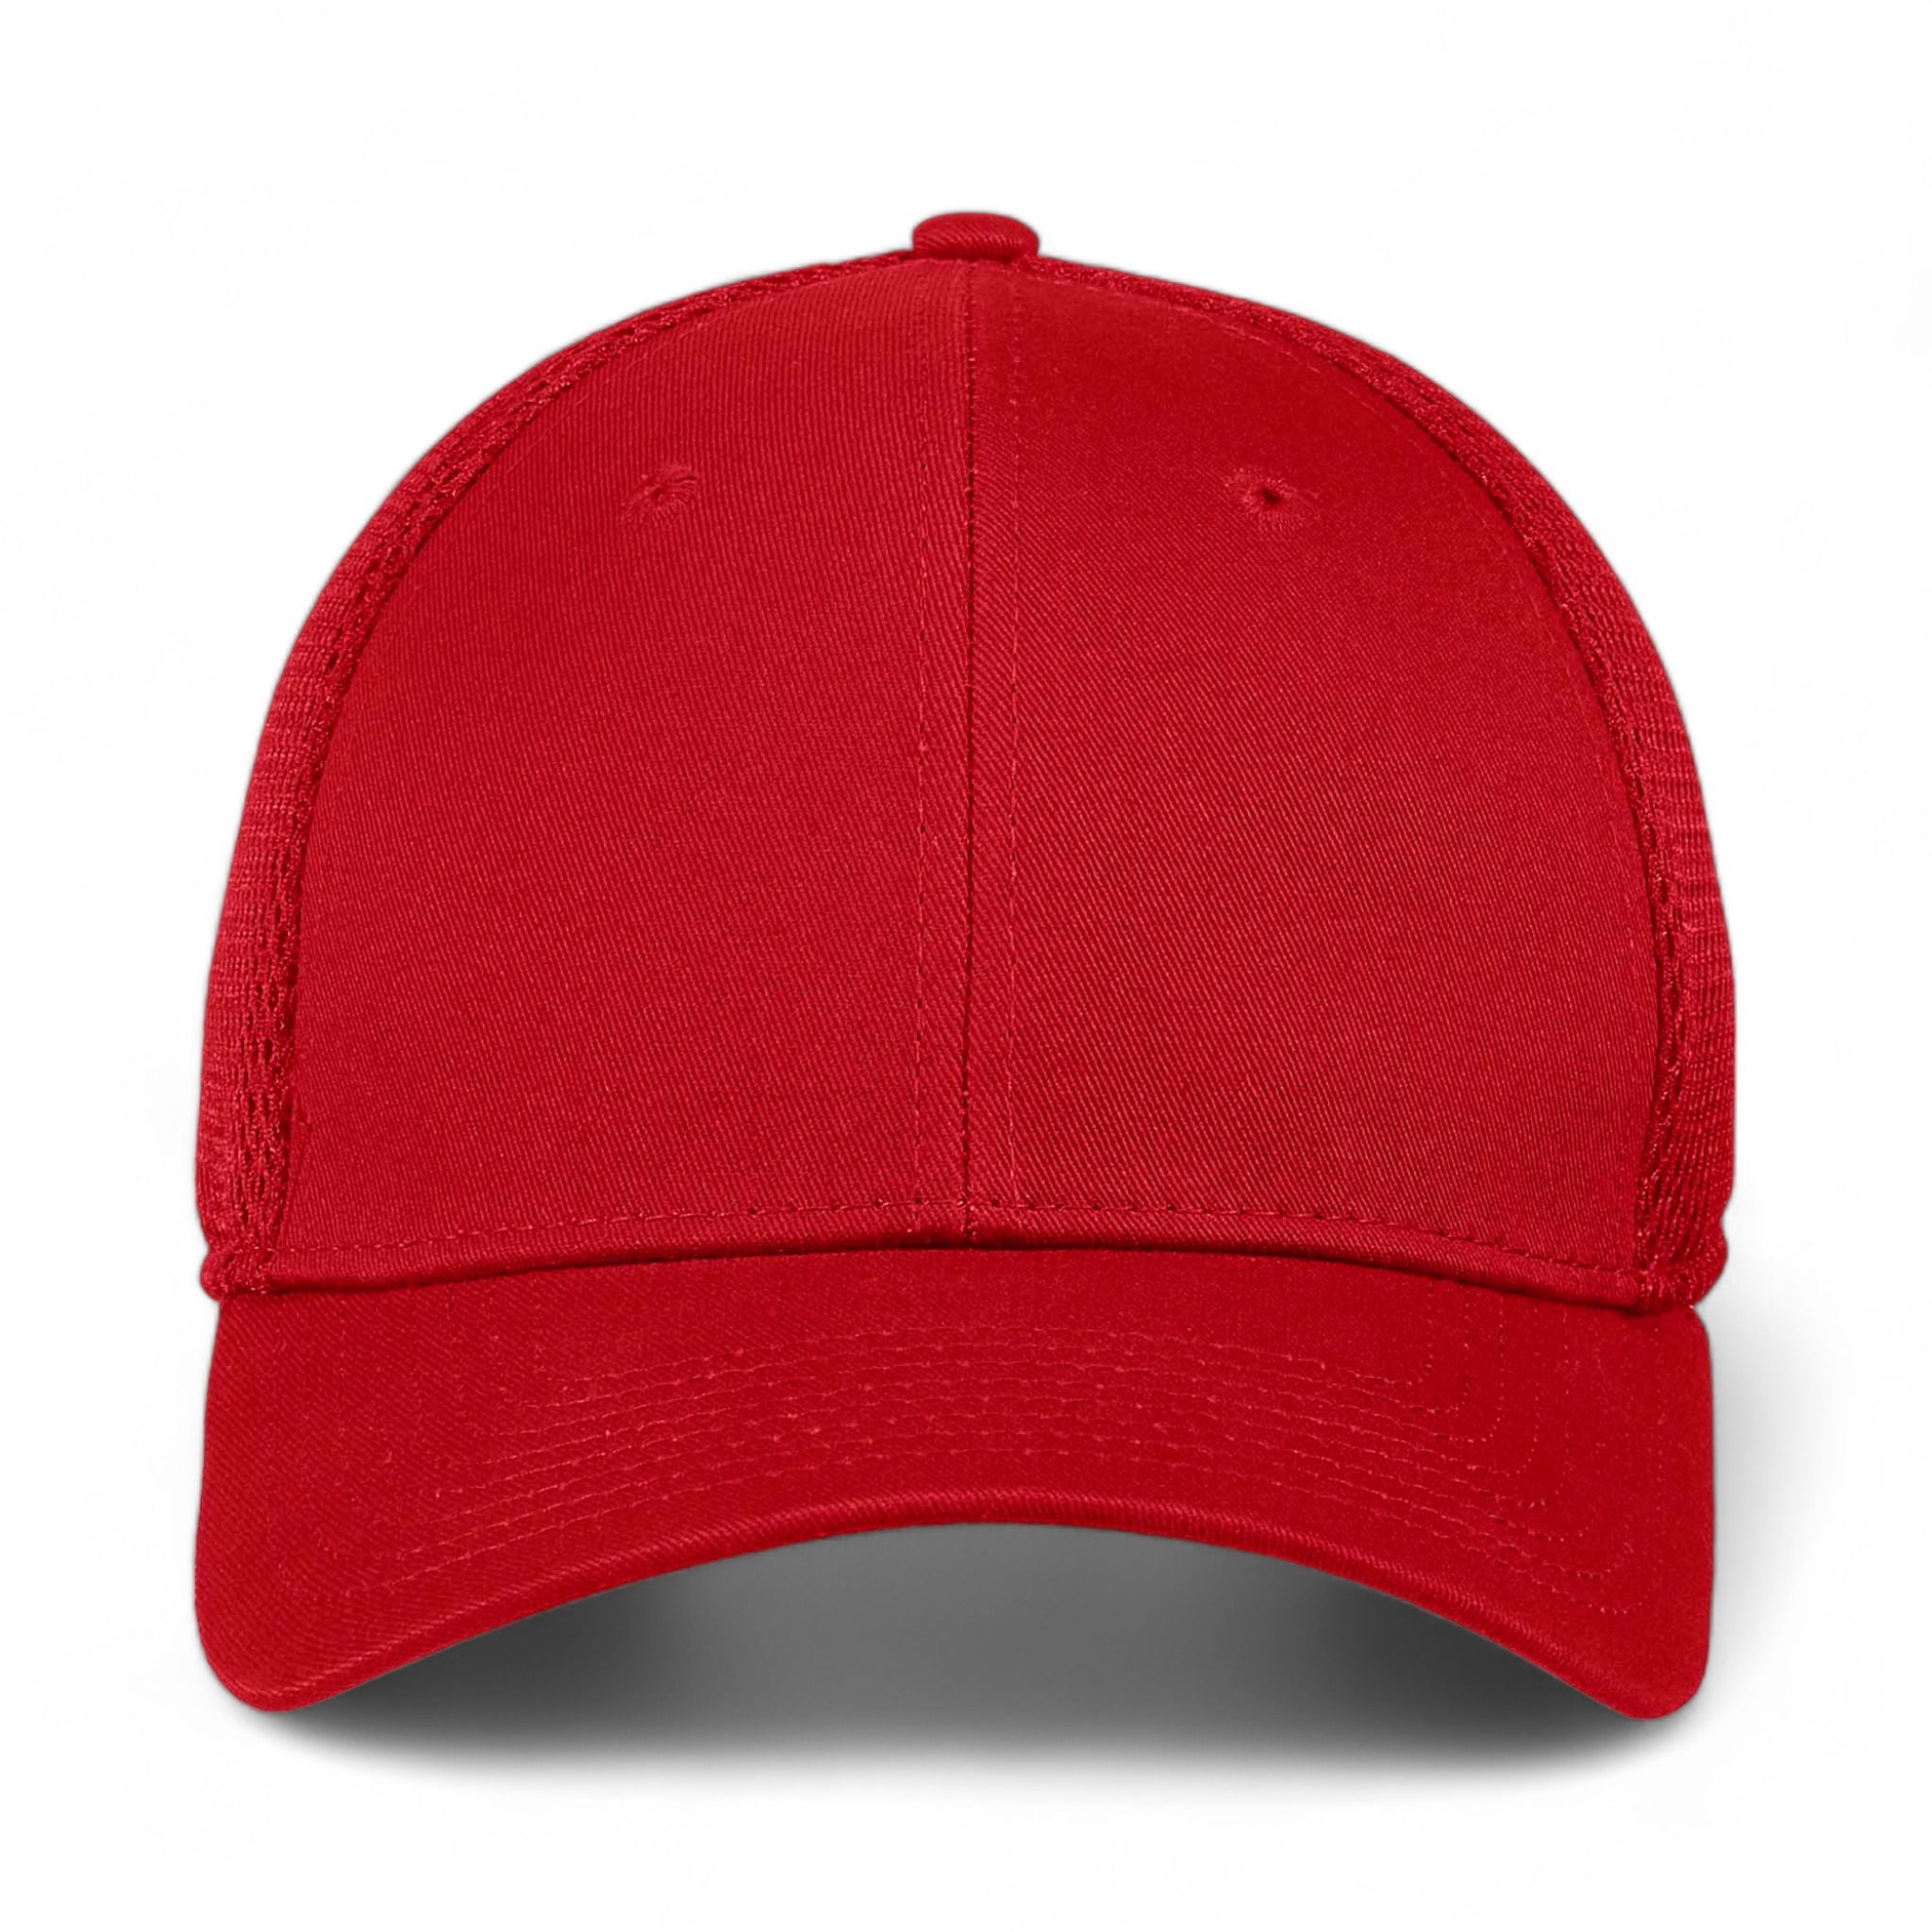 Front view of New Era NE1020 custom hat in scarlet red